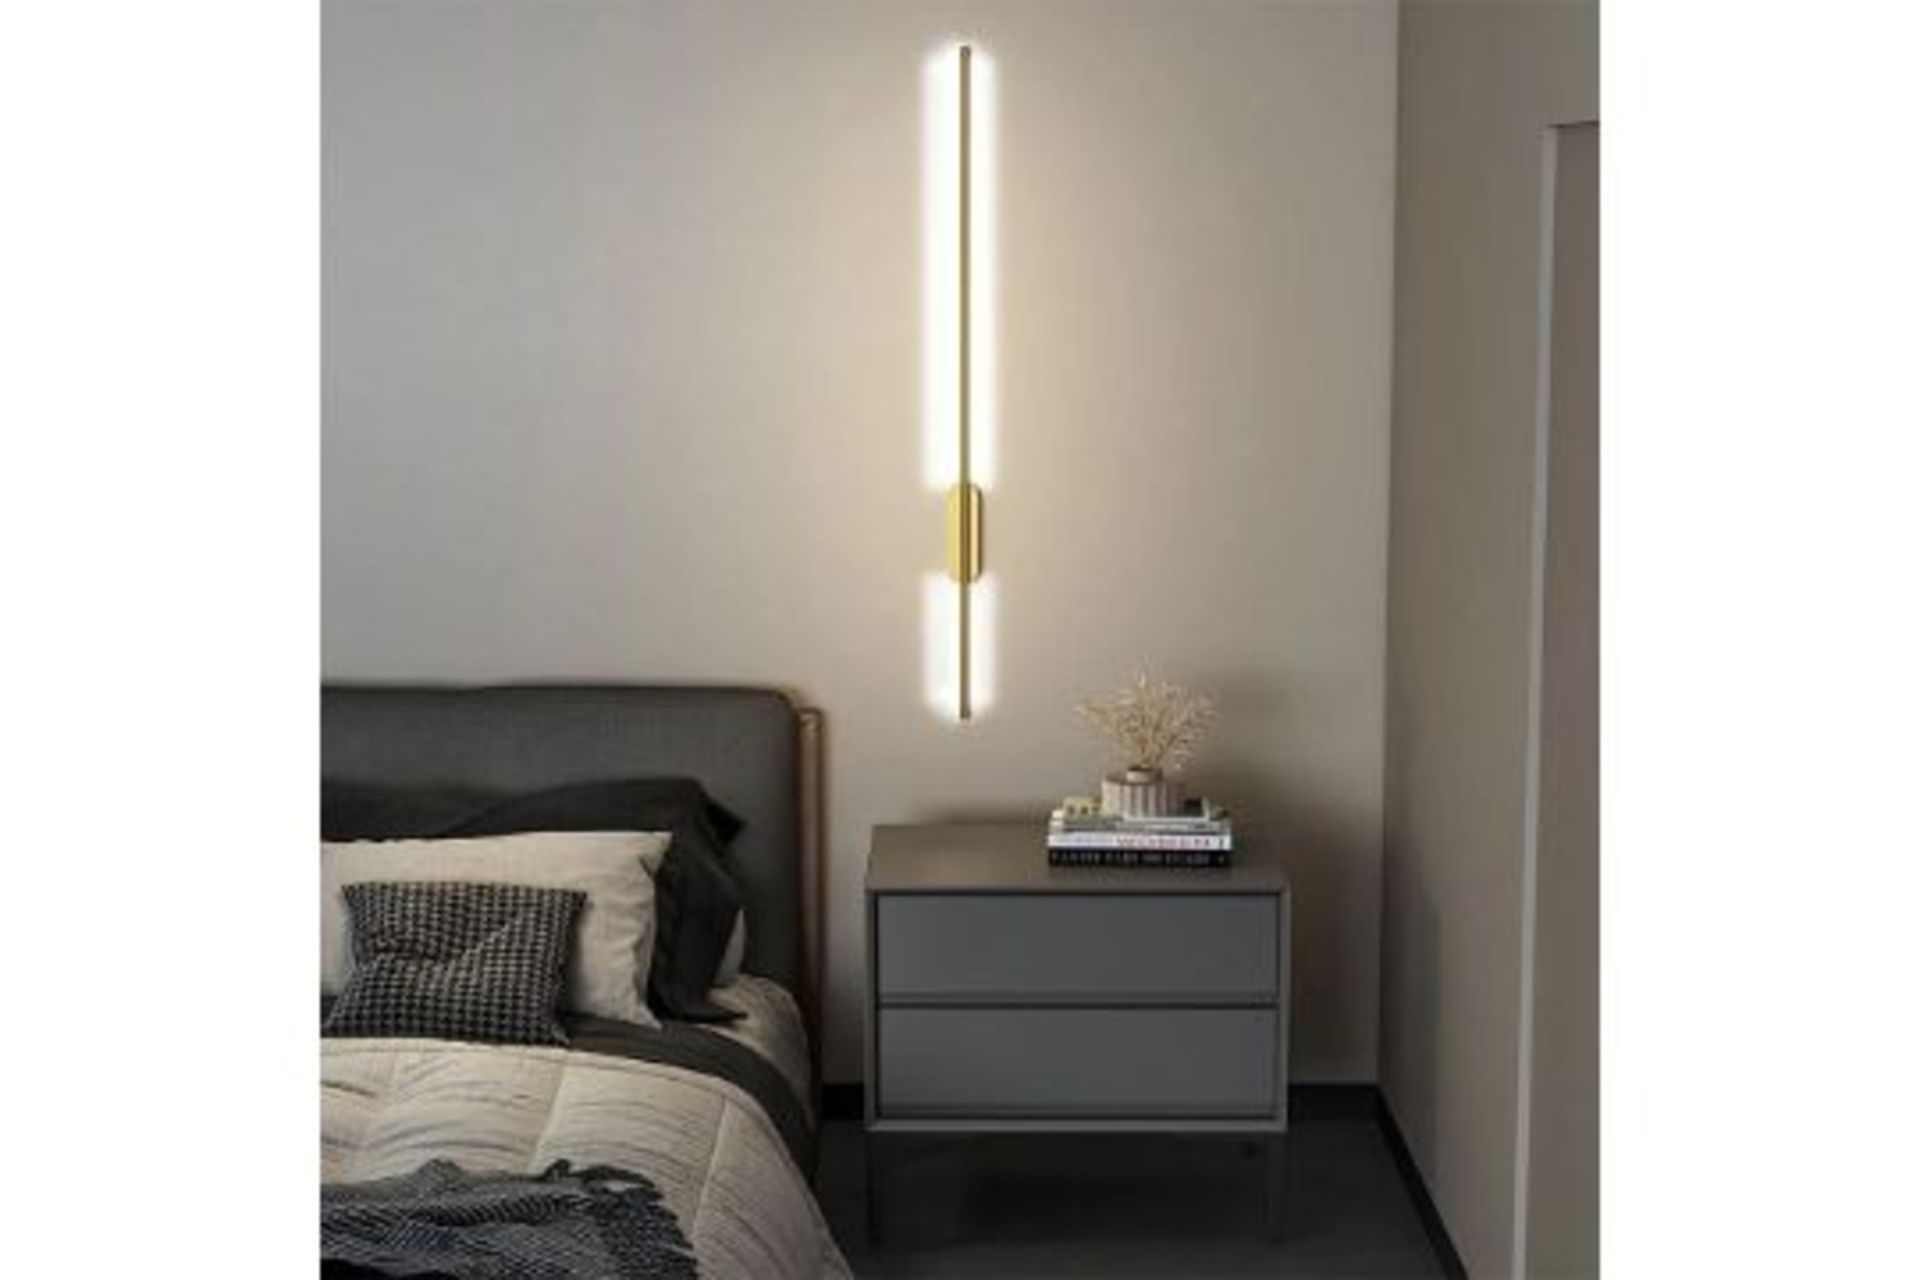 Modern Gold Aluminum Linear LED Wall Lighting Fixture 100cm. - ER45. The linear light is made of